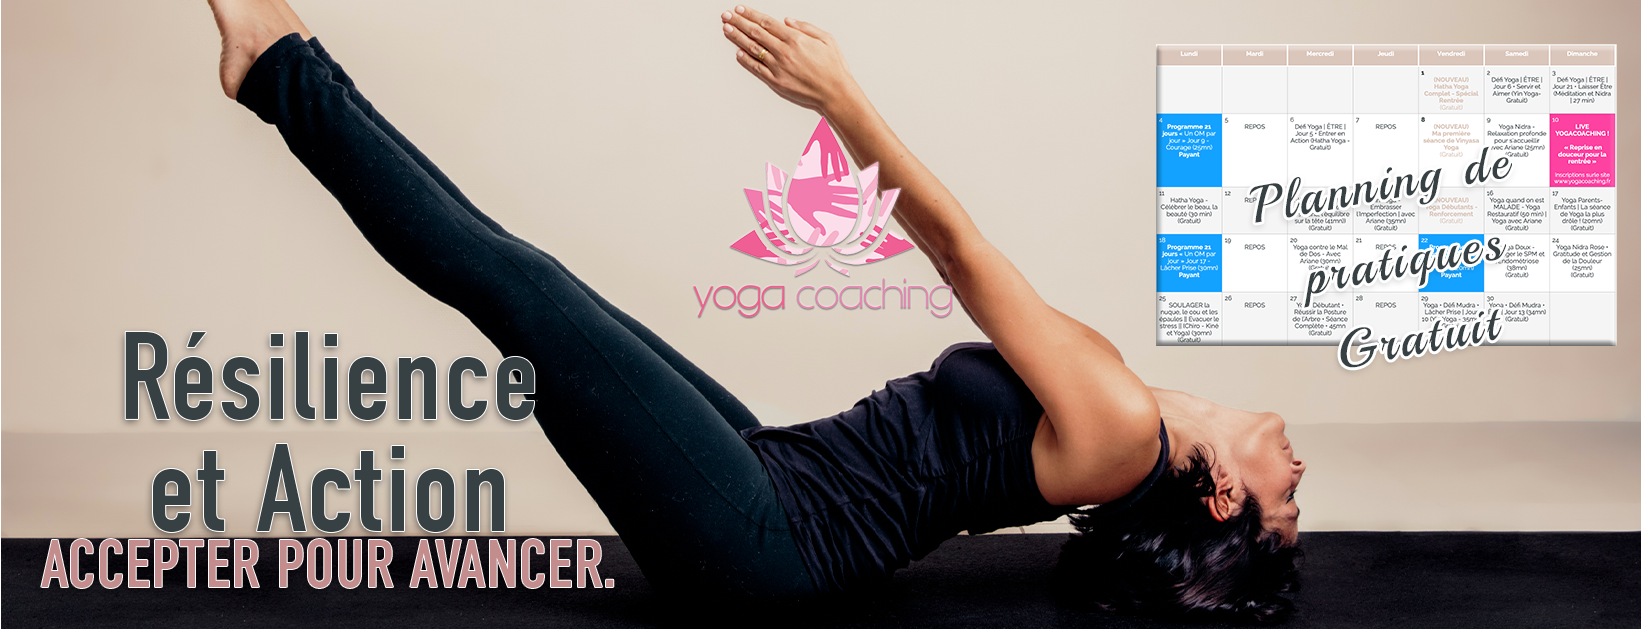 planning pratique yoga novembre